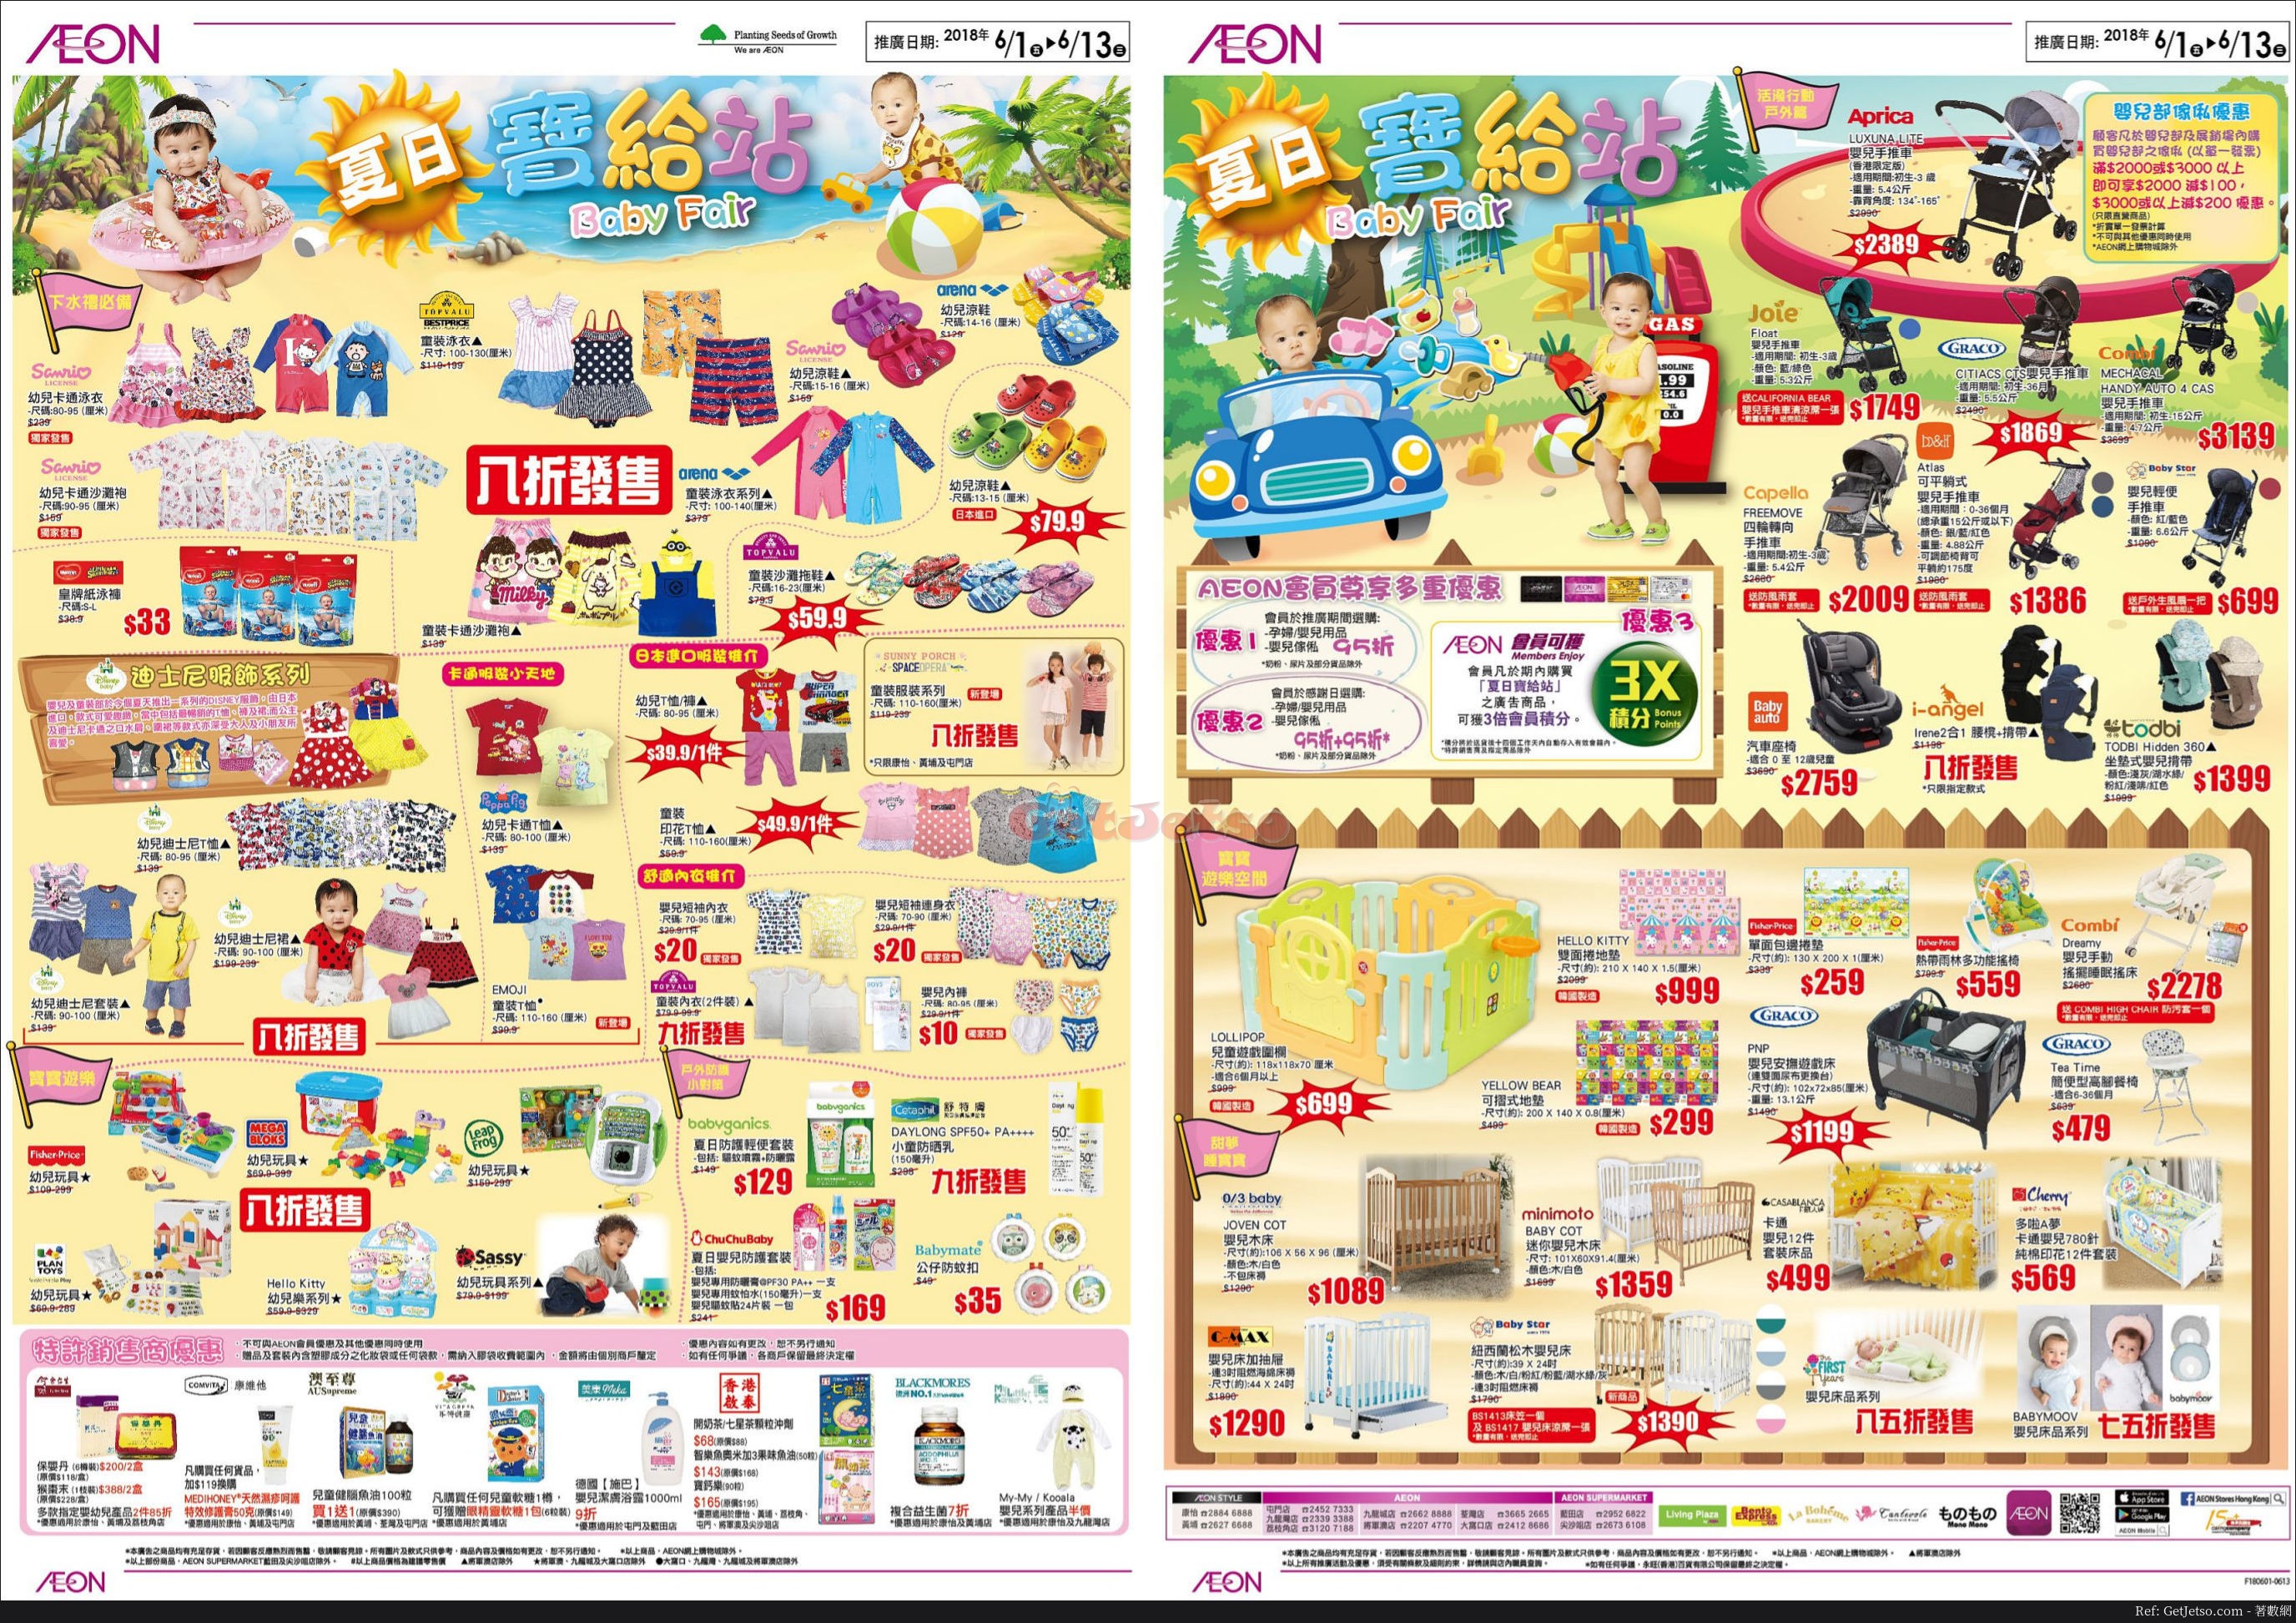 AEON 夏日BB用品展購物優惠(至18年6月1-13日)圖片1